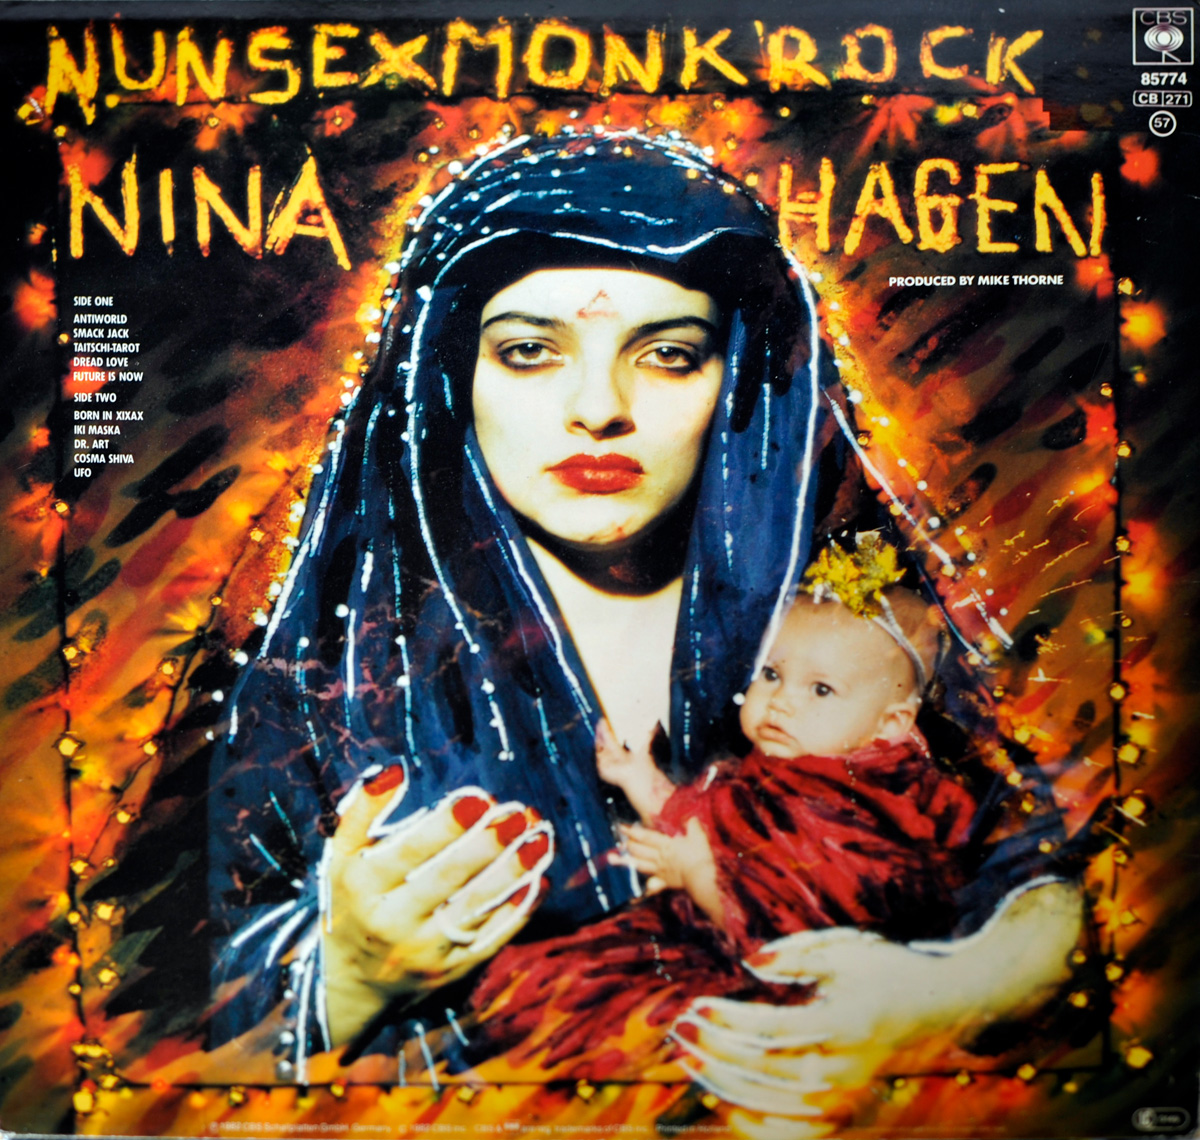 Nina Hagen - Nun Sex Monk Rock nunsexmonkrock 12" LP VINYL